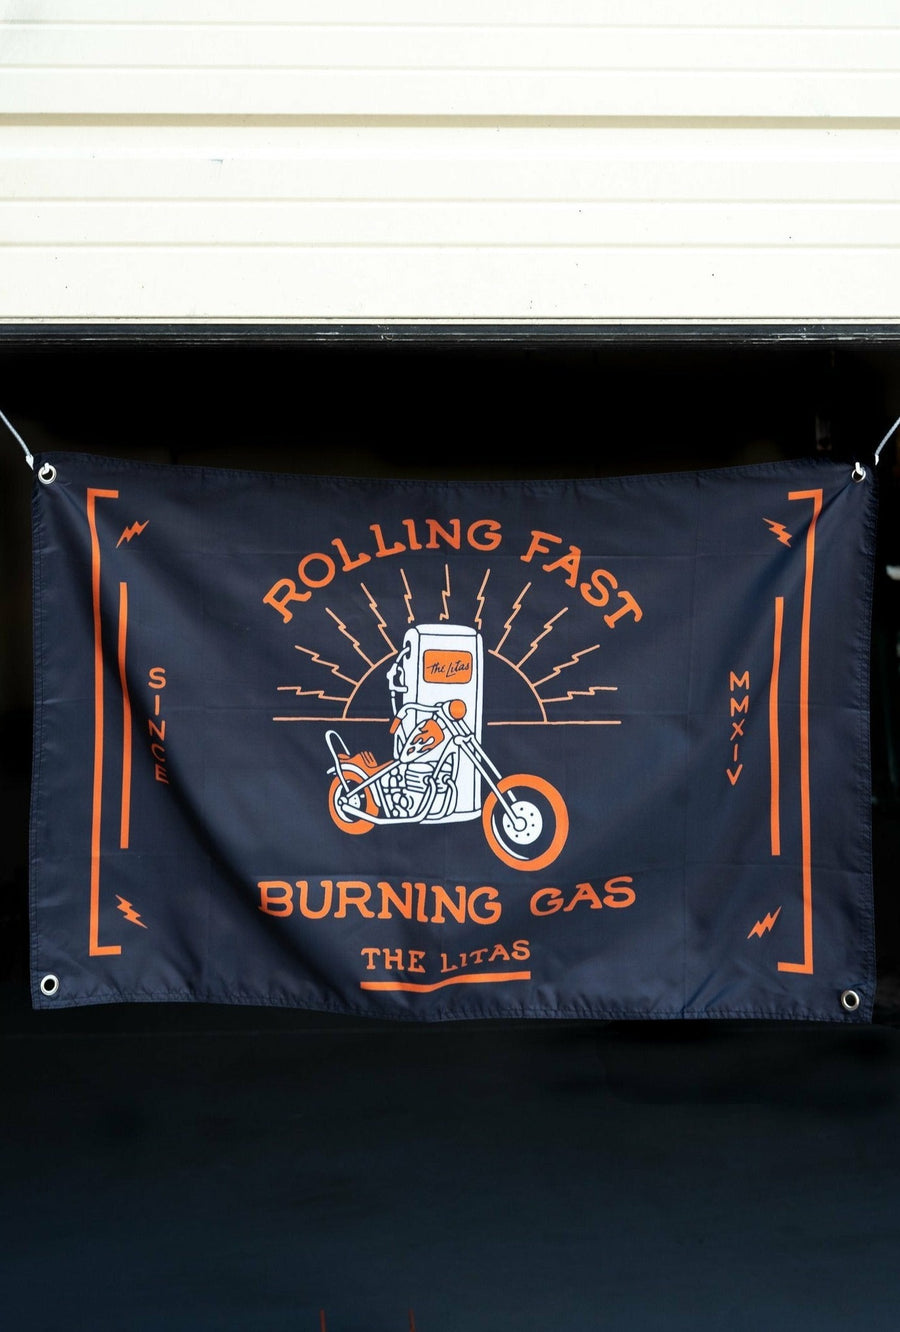 Gas Burner Flag